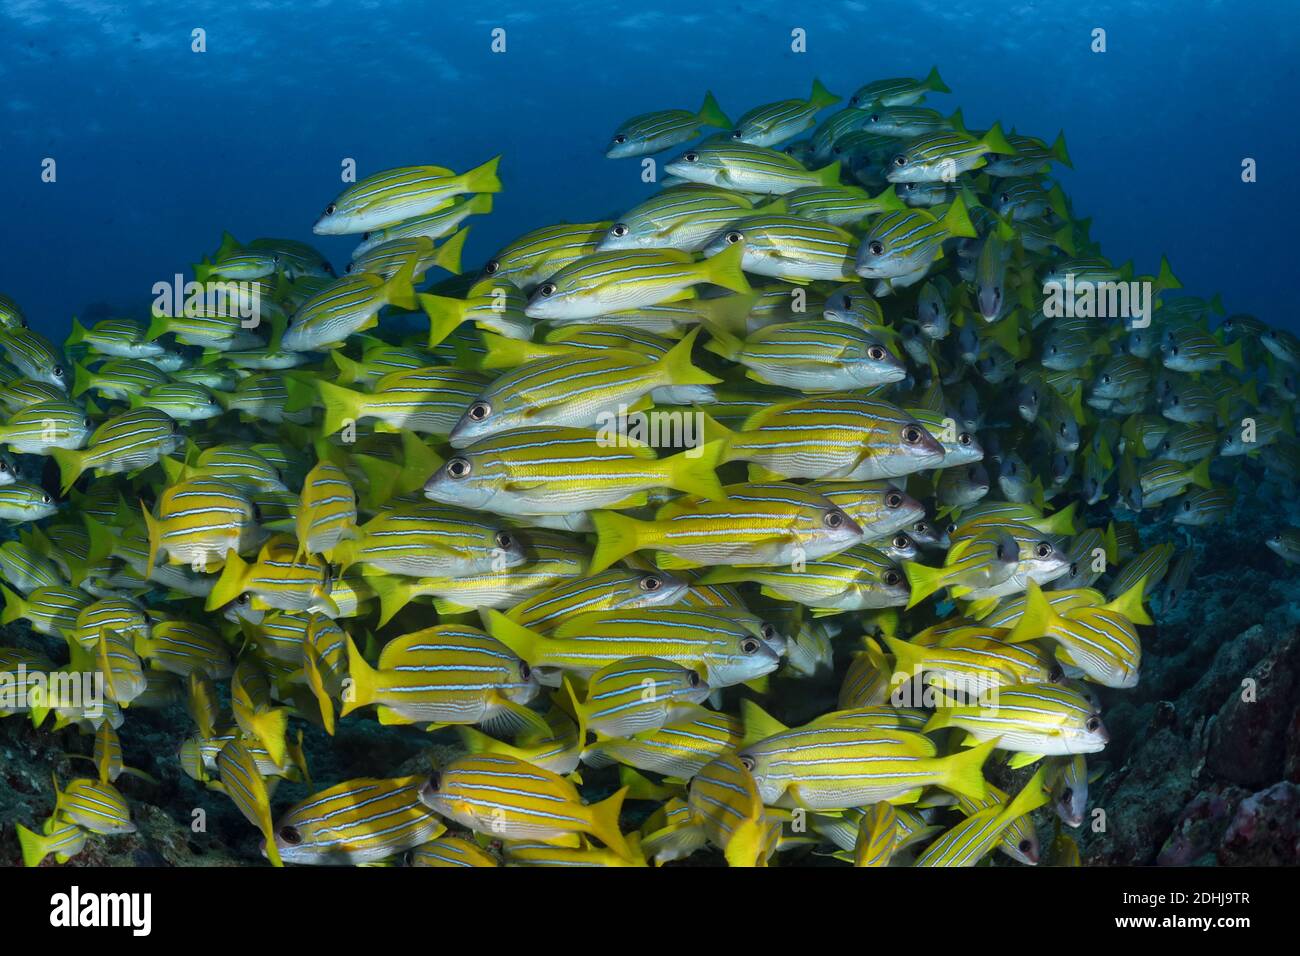 School of Bluestripe Snapper (Lutjanus kasmira). Underwater world of Maldives Stock Photo